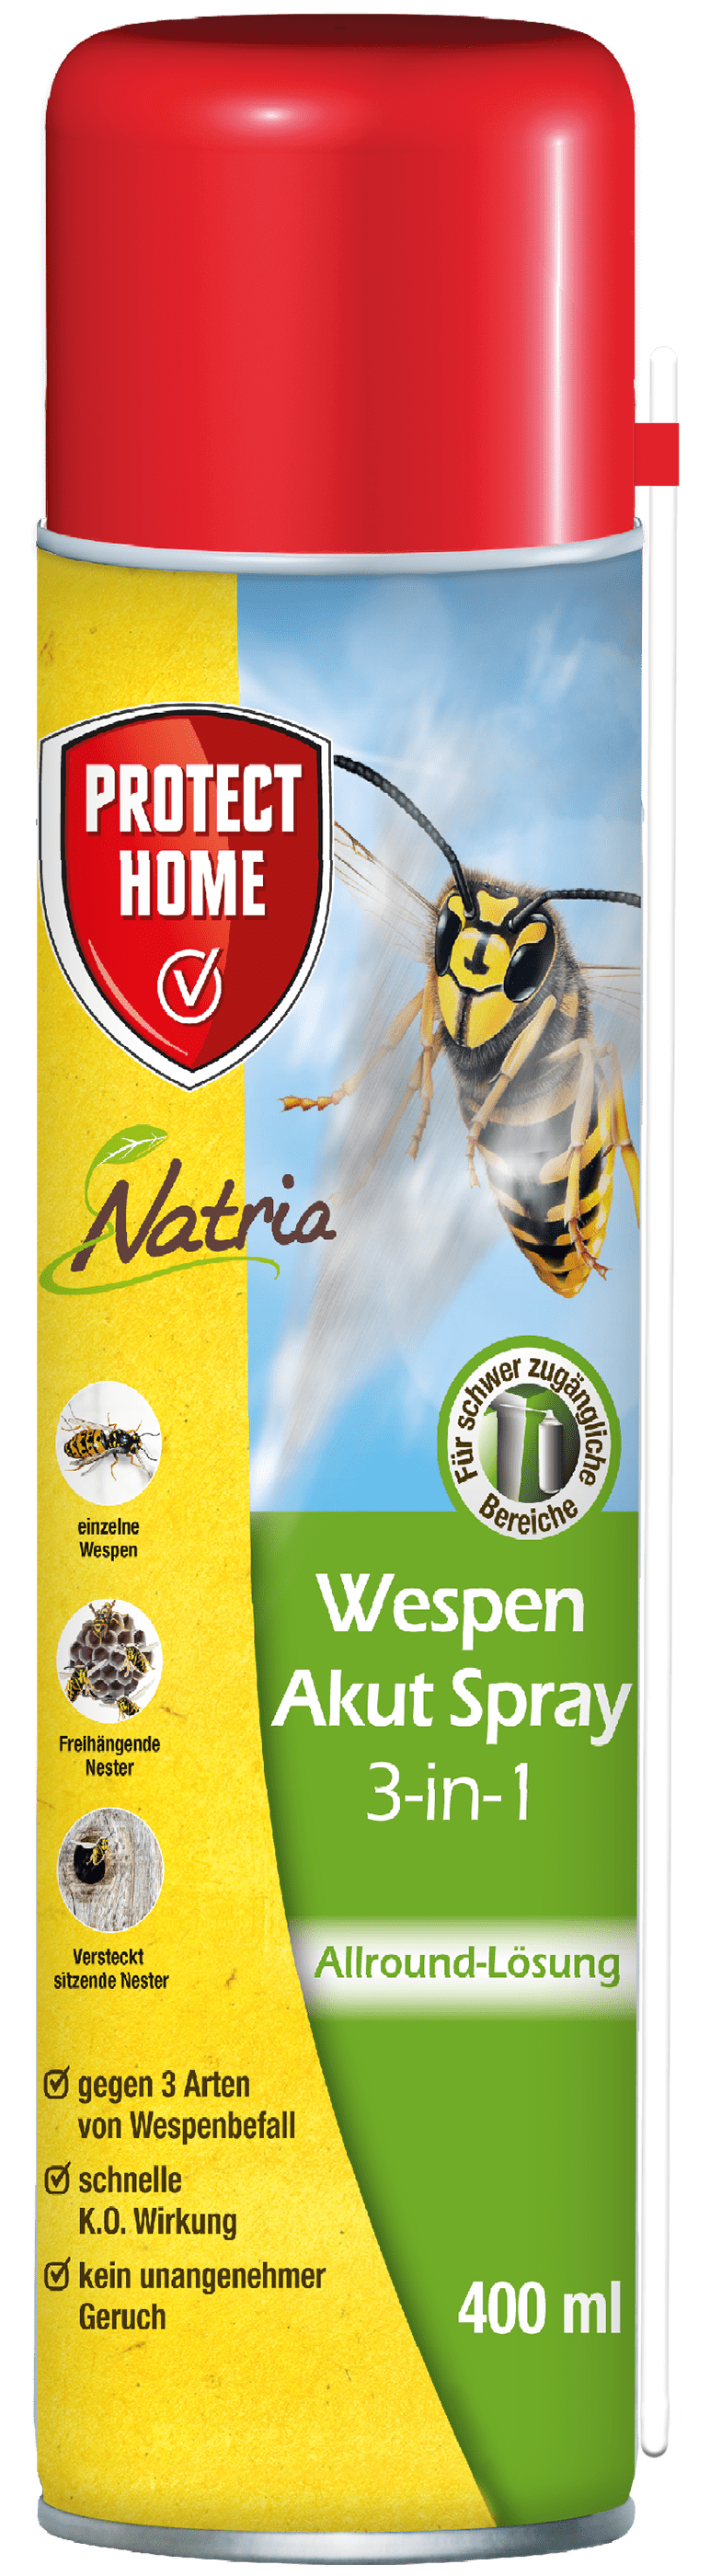 Protect Home Natria Wespen Akut Spray 3-in-1 400ml